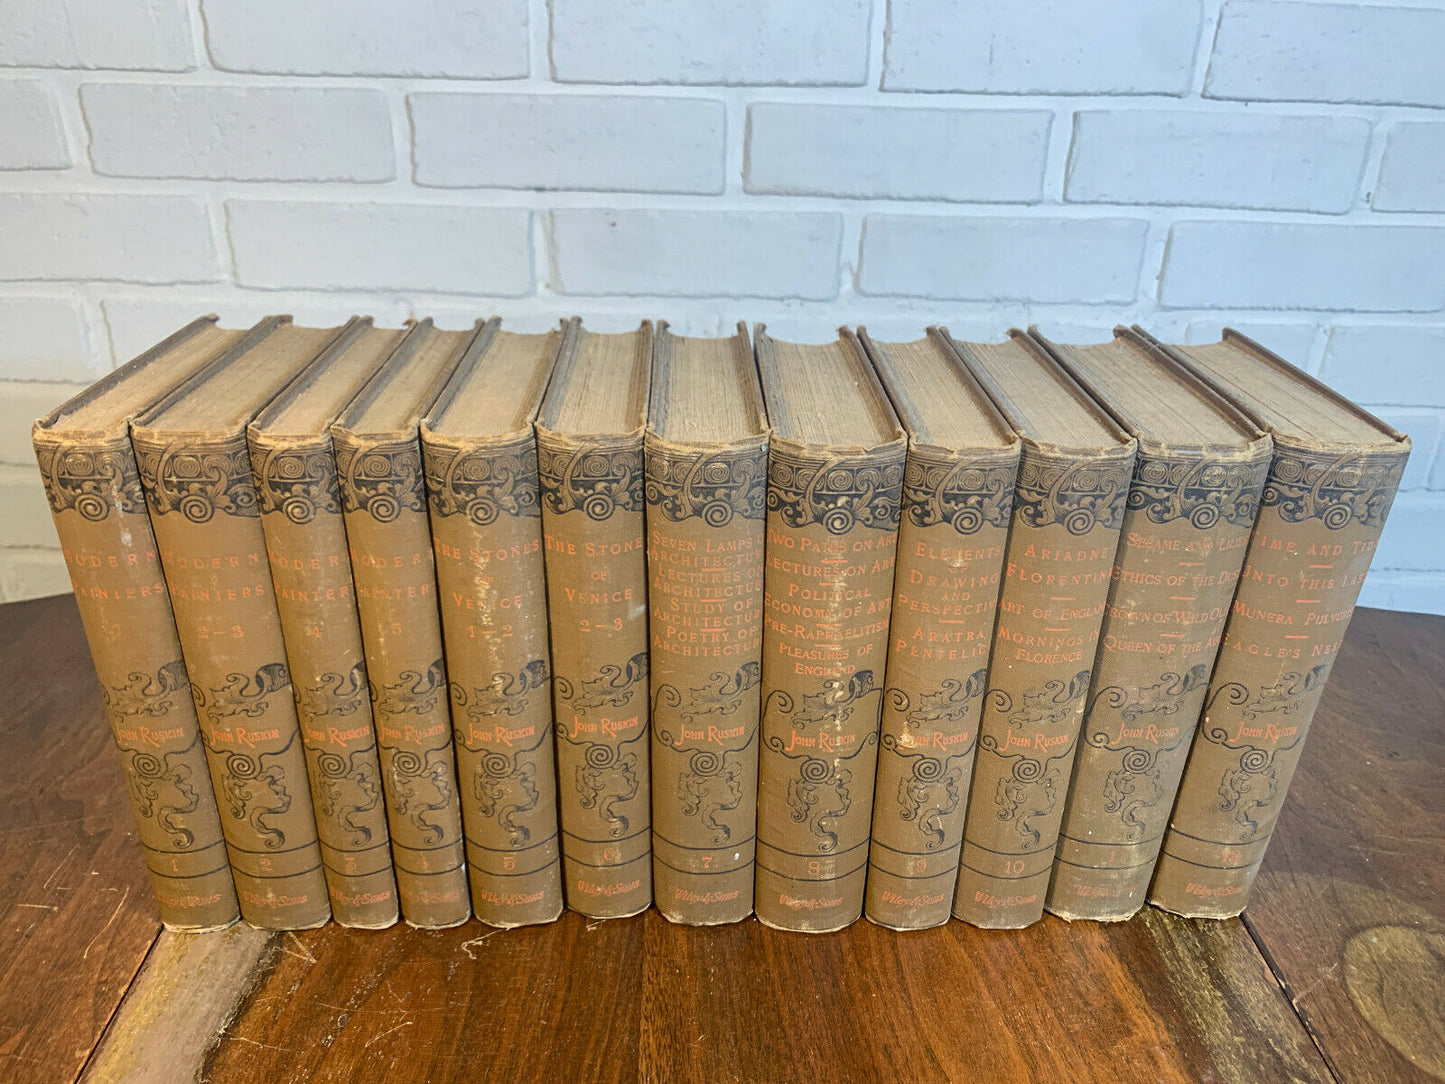 Works of John Ruskin: Popular Edition, 12 Volumes 1887 (C10)